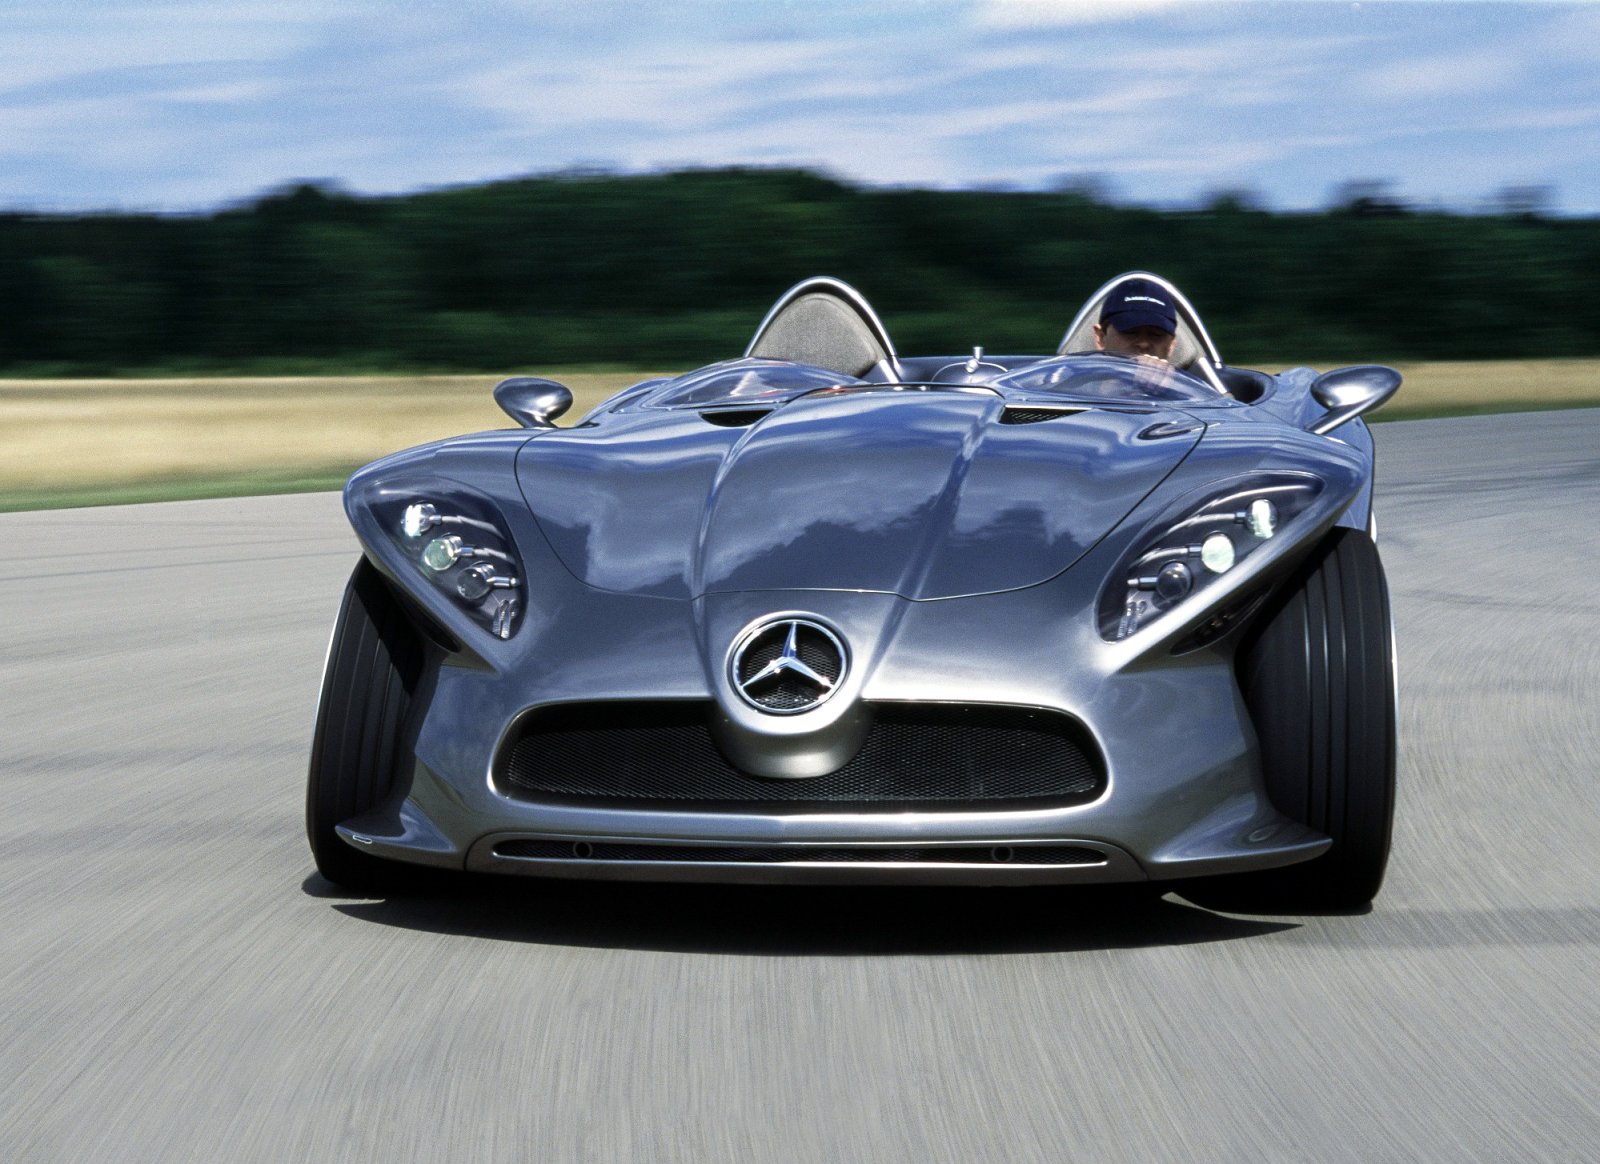 Mercedes Cars Images